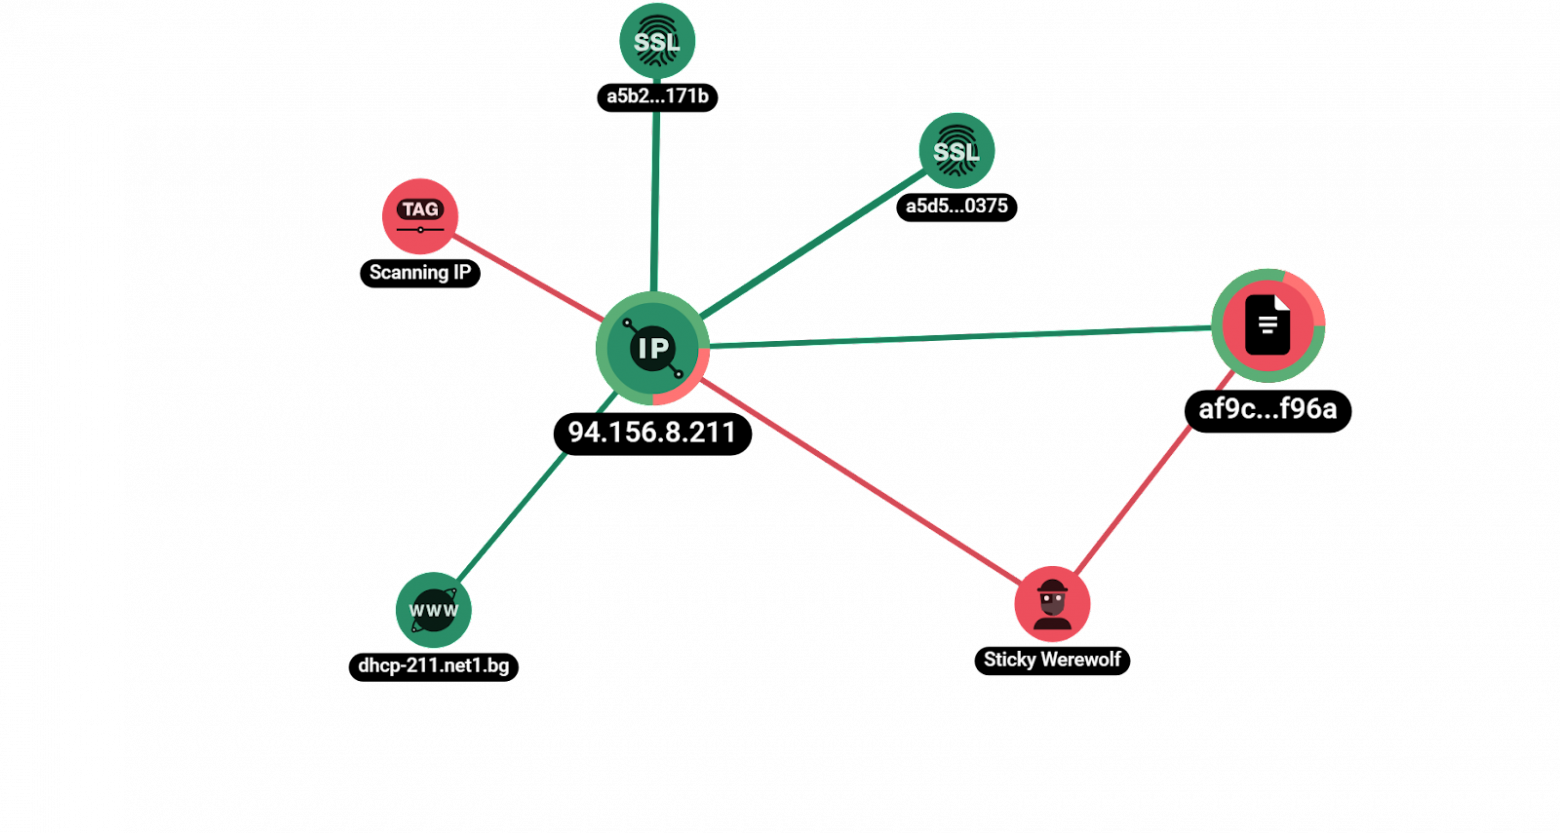 Скриншот графового анализа сетевой инфраструктуры Sticky Werewolf